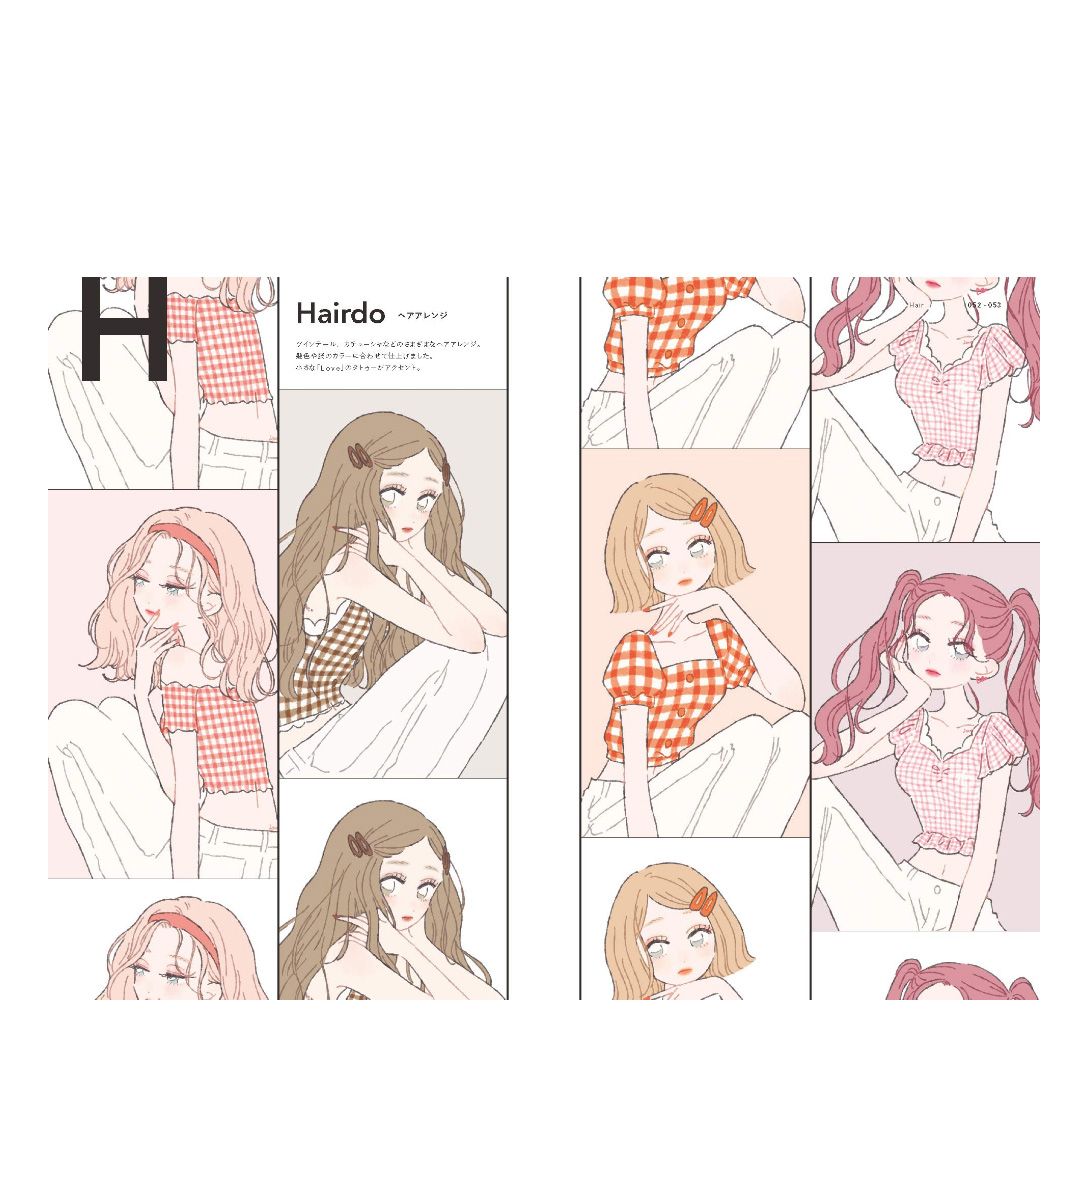 Fashion Illustration Book : The Art Of Tanaka